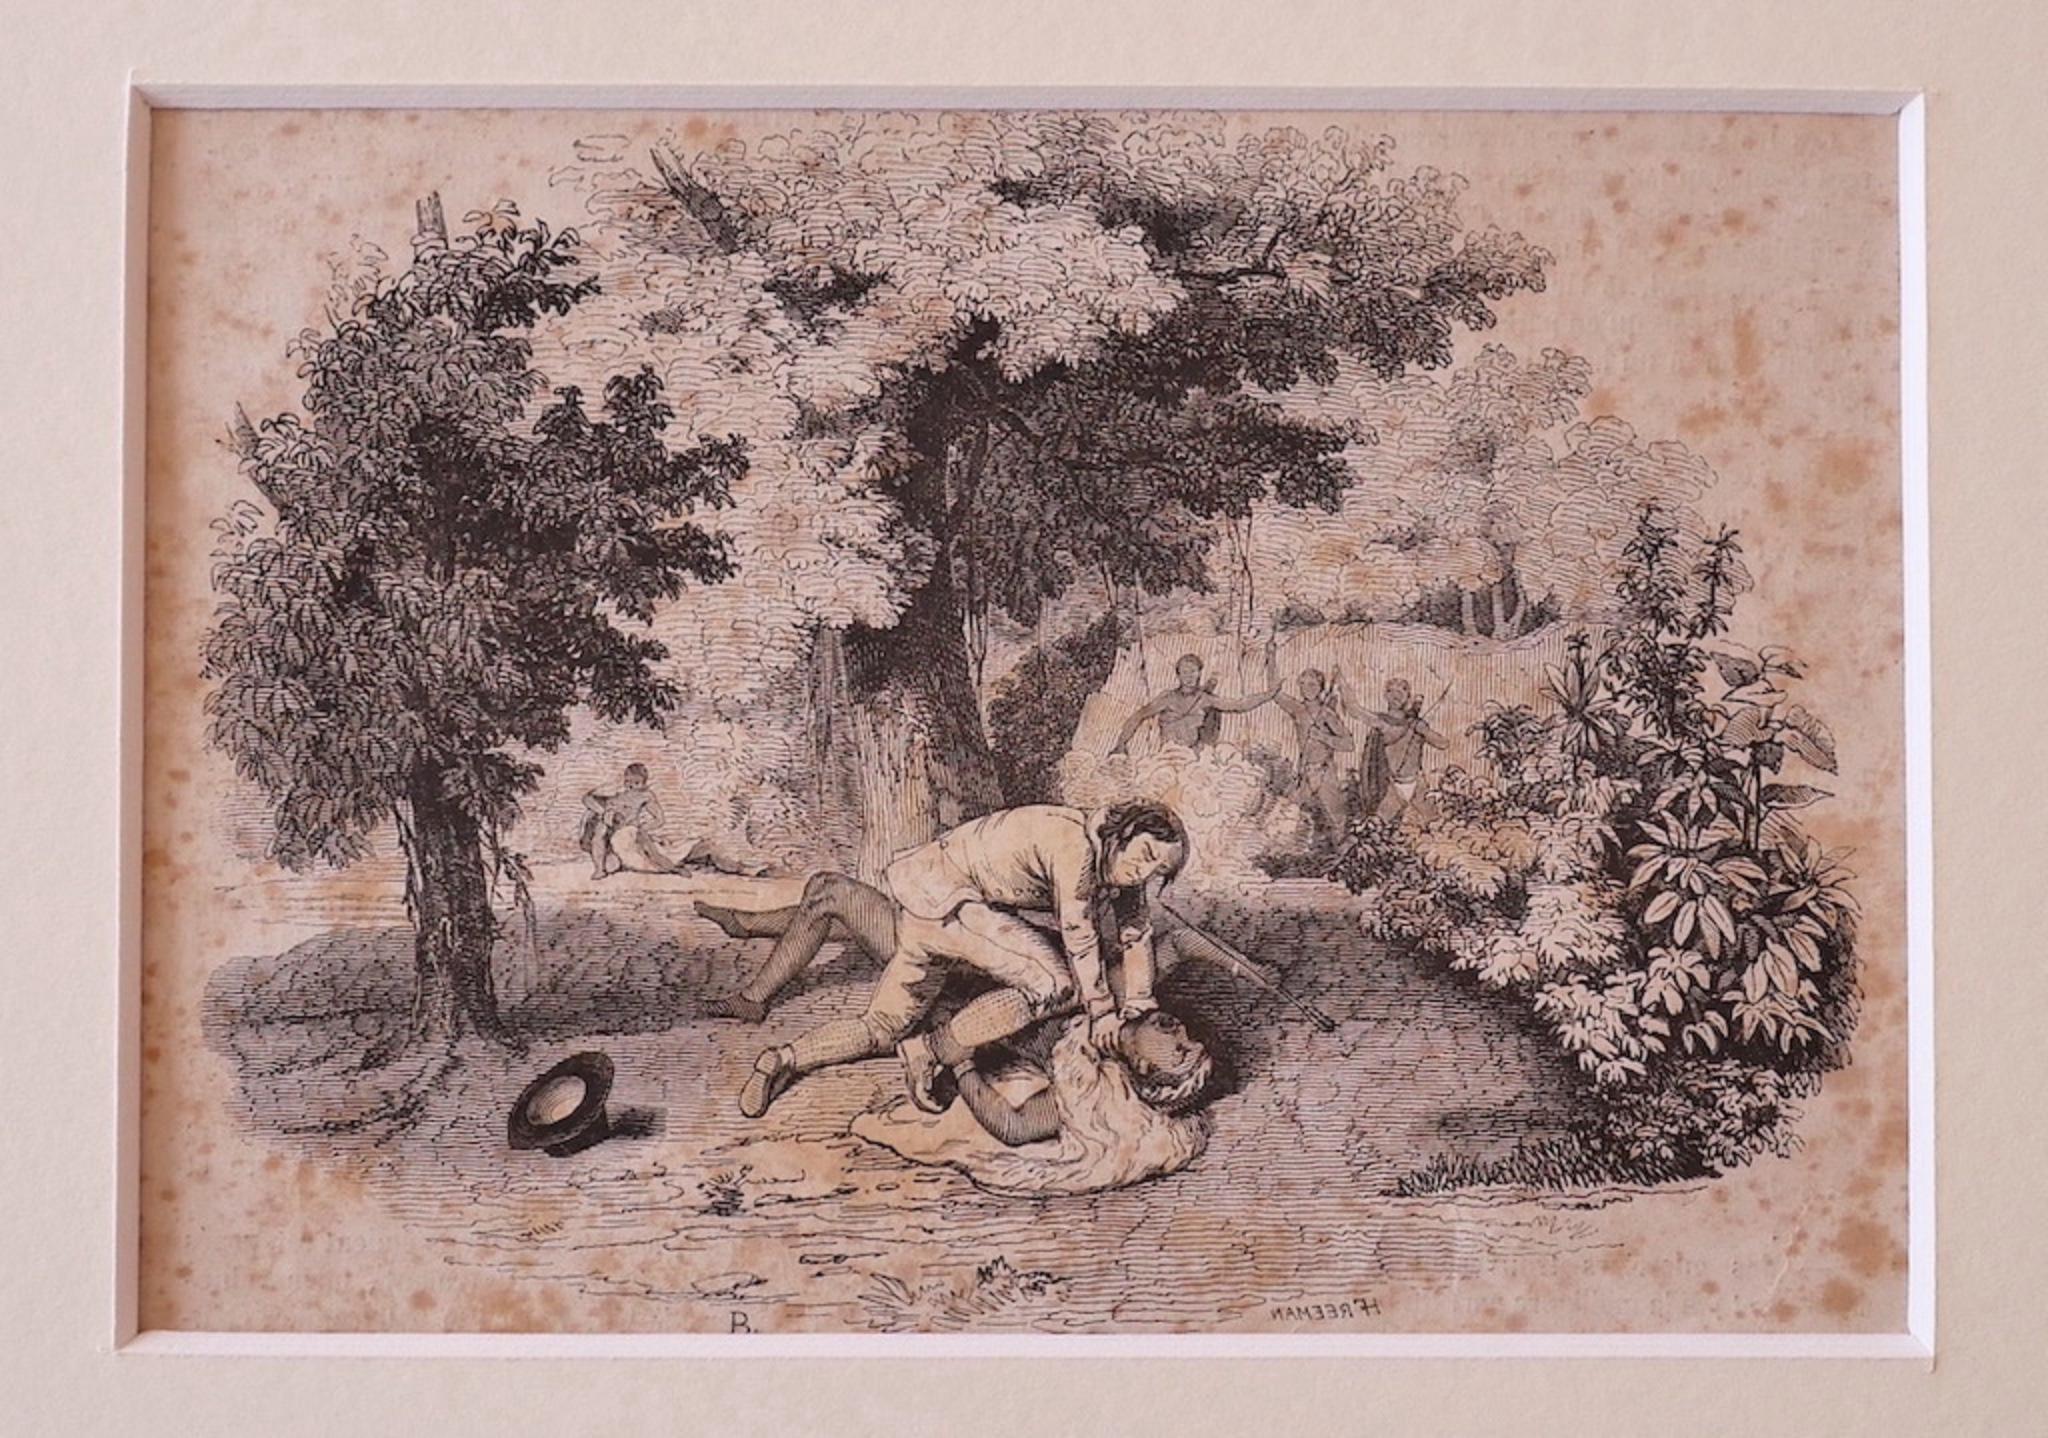 Unknown Figurative Print - The Fight - Original Lithograph - 19th Century